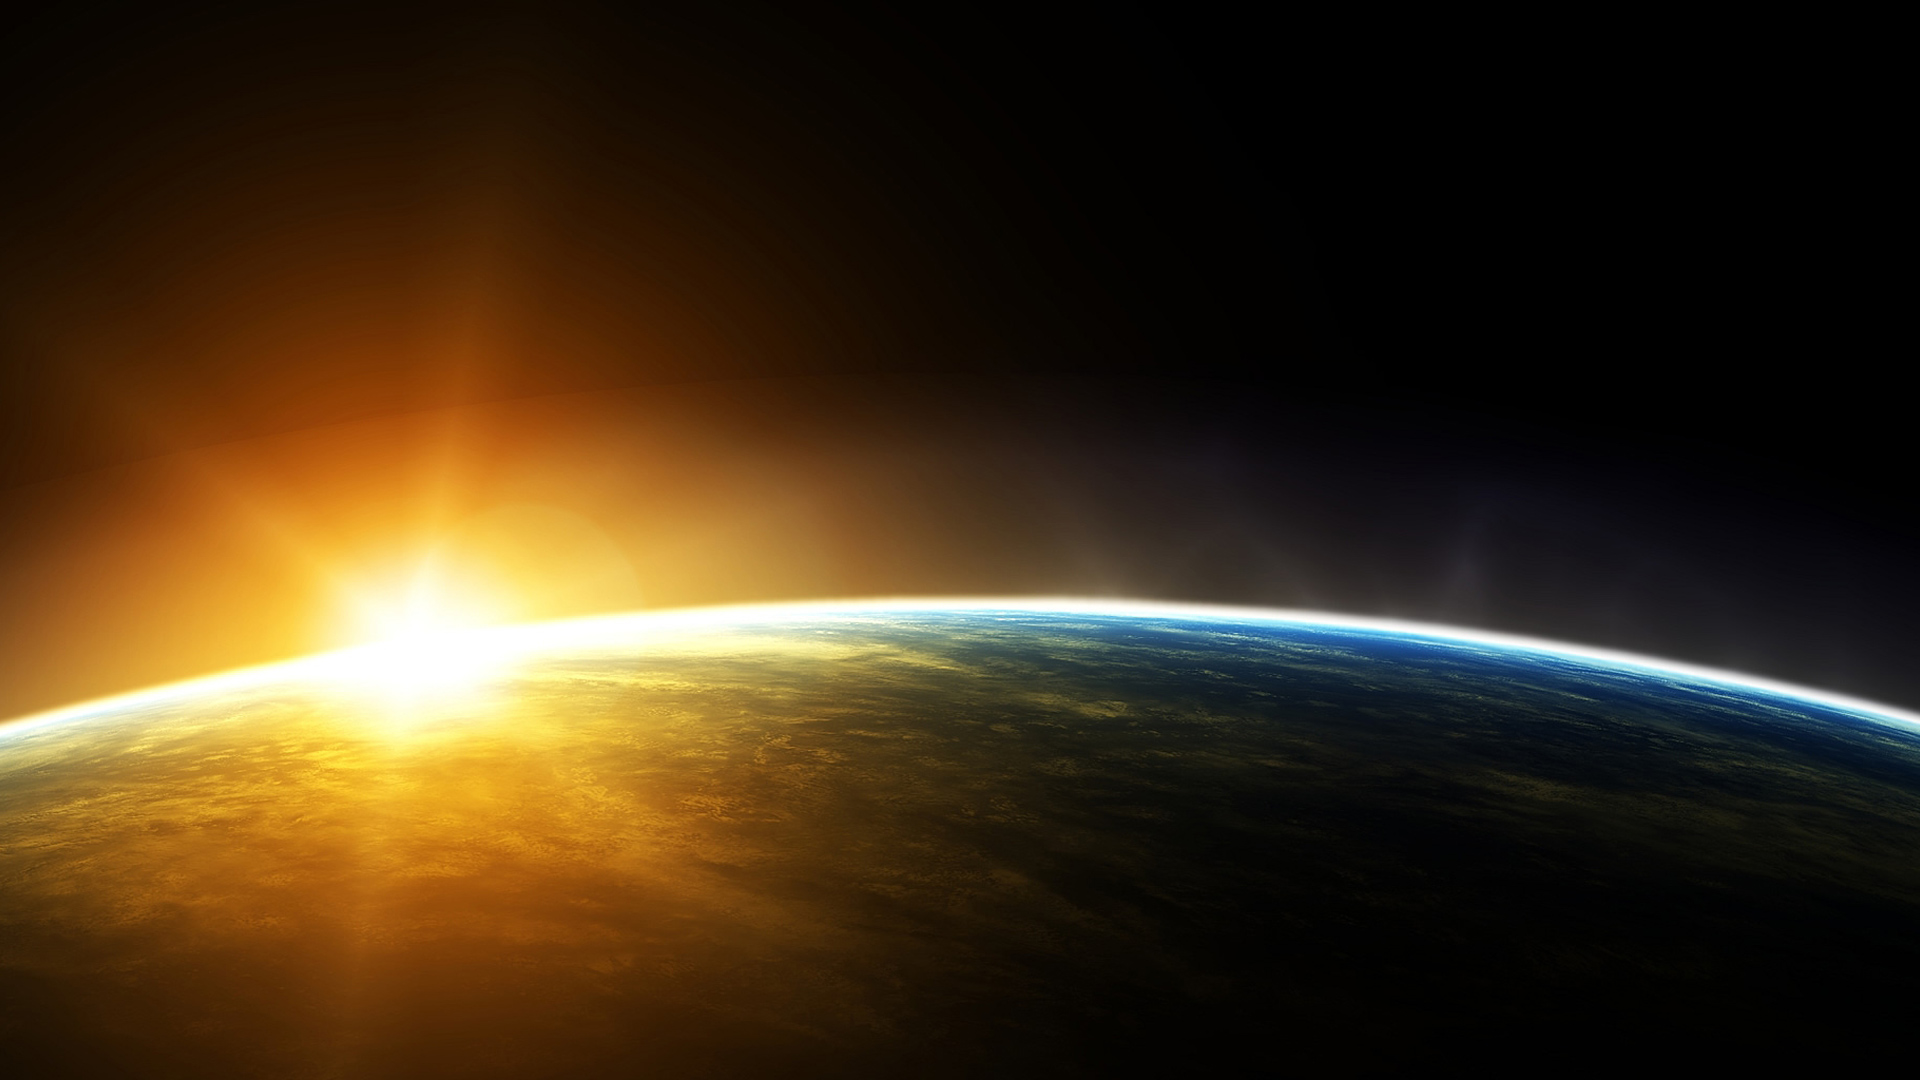 atmosphere at sunrise - NASA